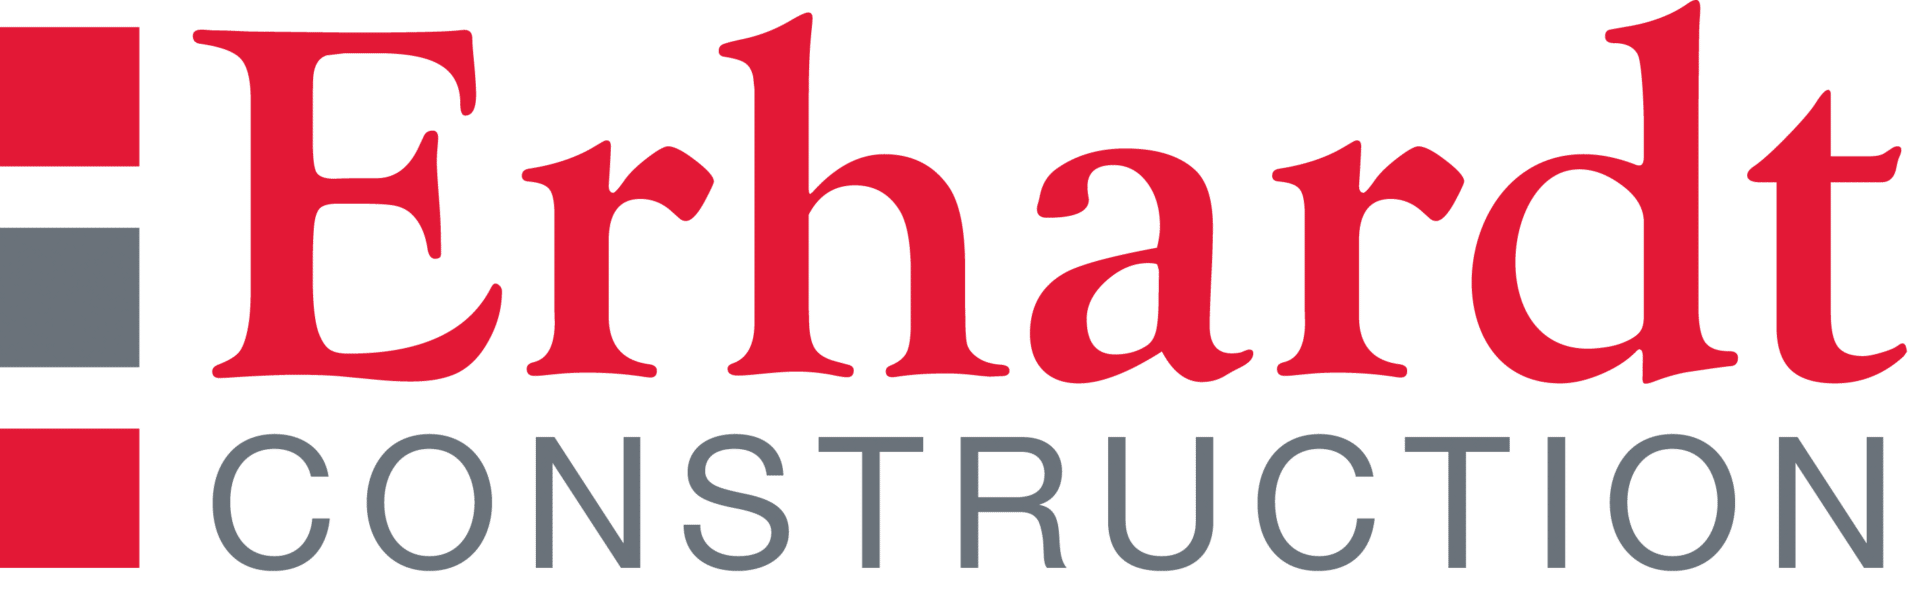 Erhardt CC Logo new